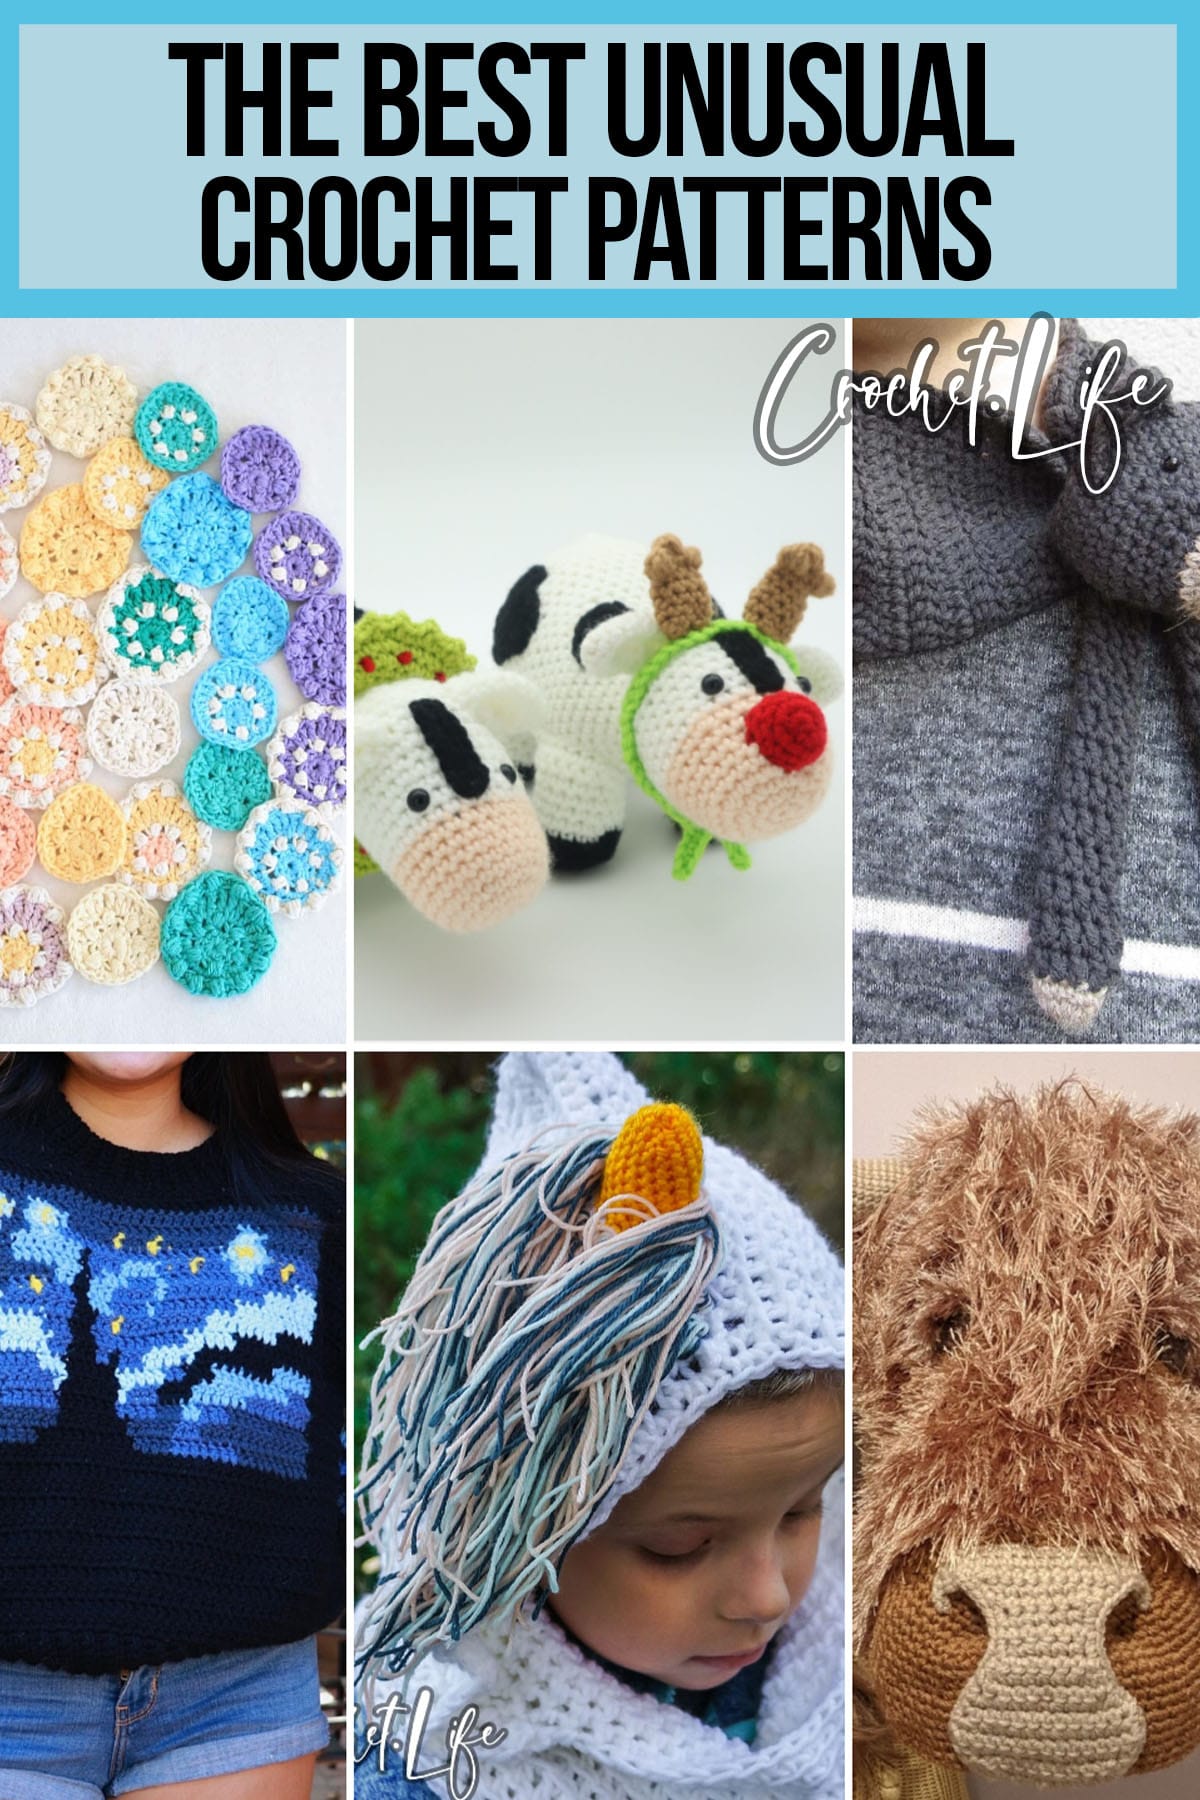 9 Wonderfully Unusual Crochet Patterns   Crochet Life